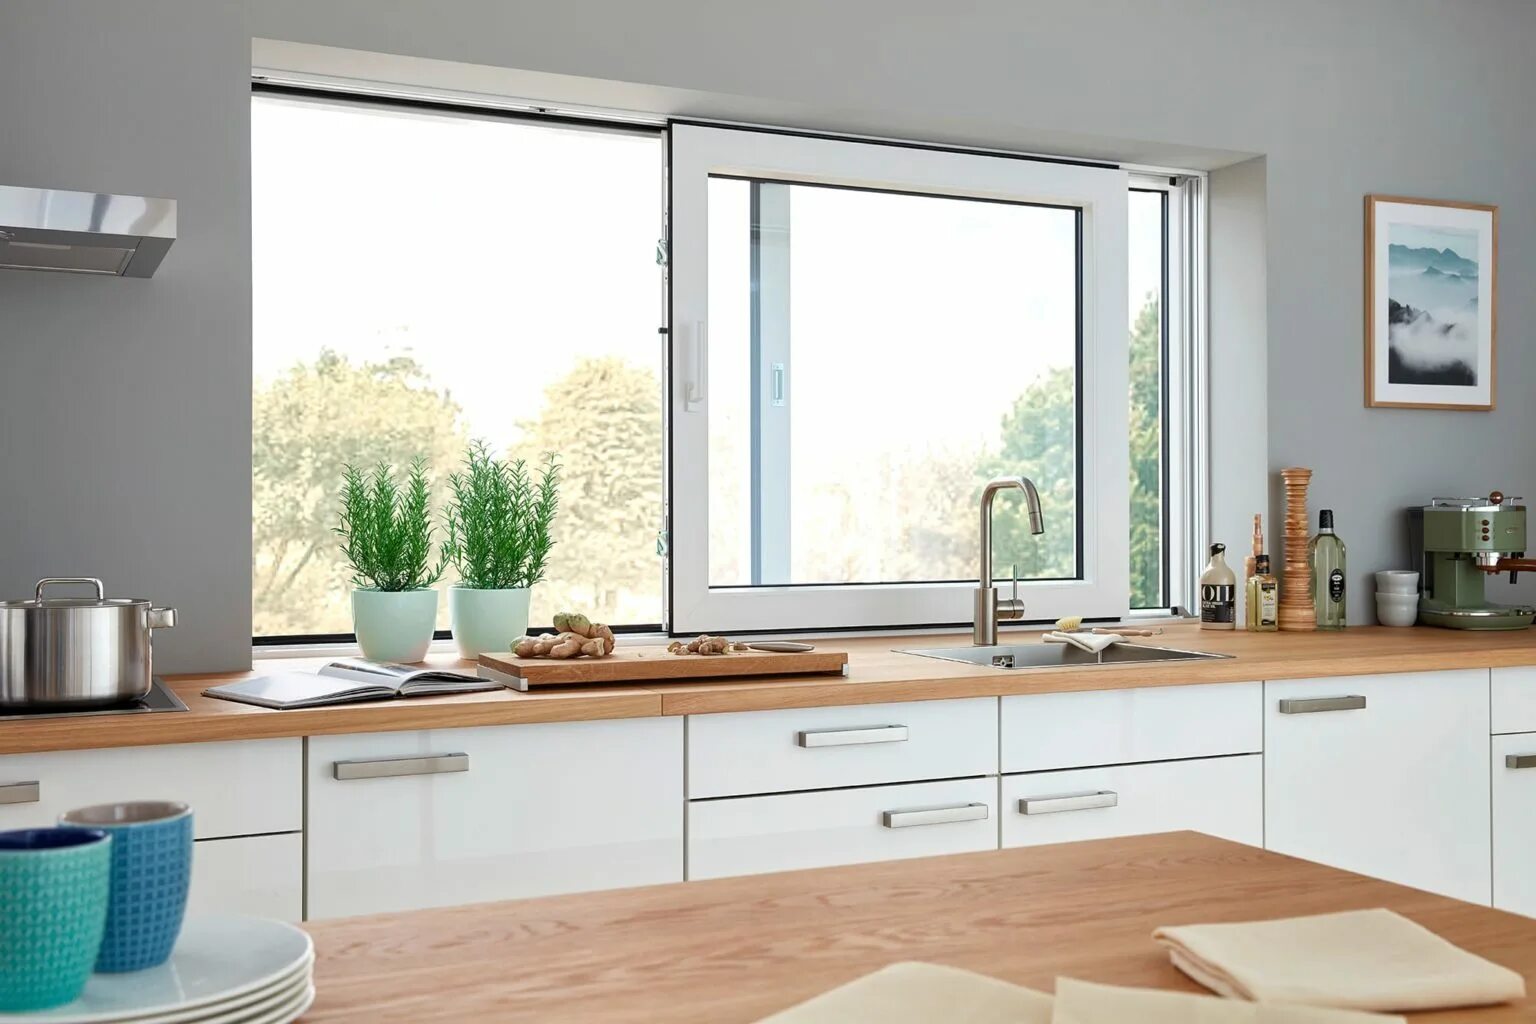 Установка пластикового окна кухни. Kömmerling PREMISLIDE 76. Раздвижное окно на кухню. Сдвижное окно на кухне. Раздвижные окна на кухню пластиковые.